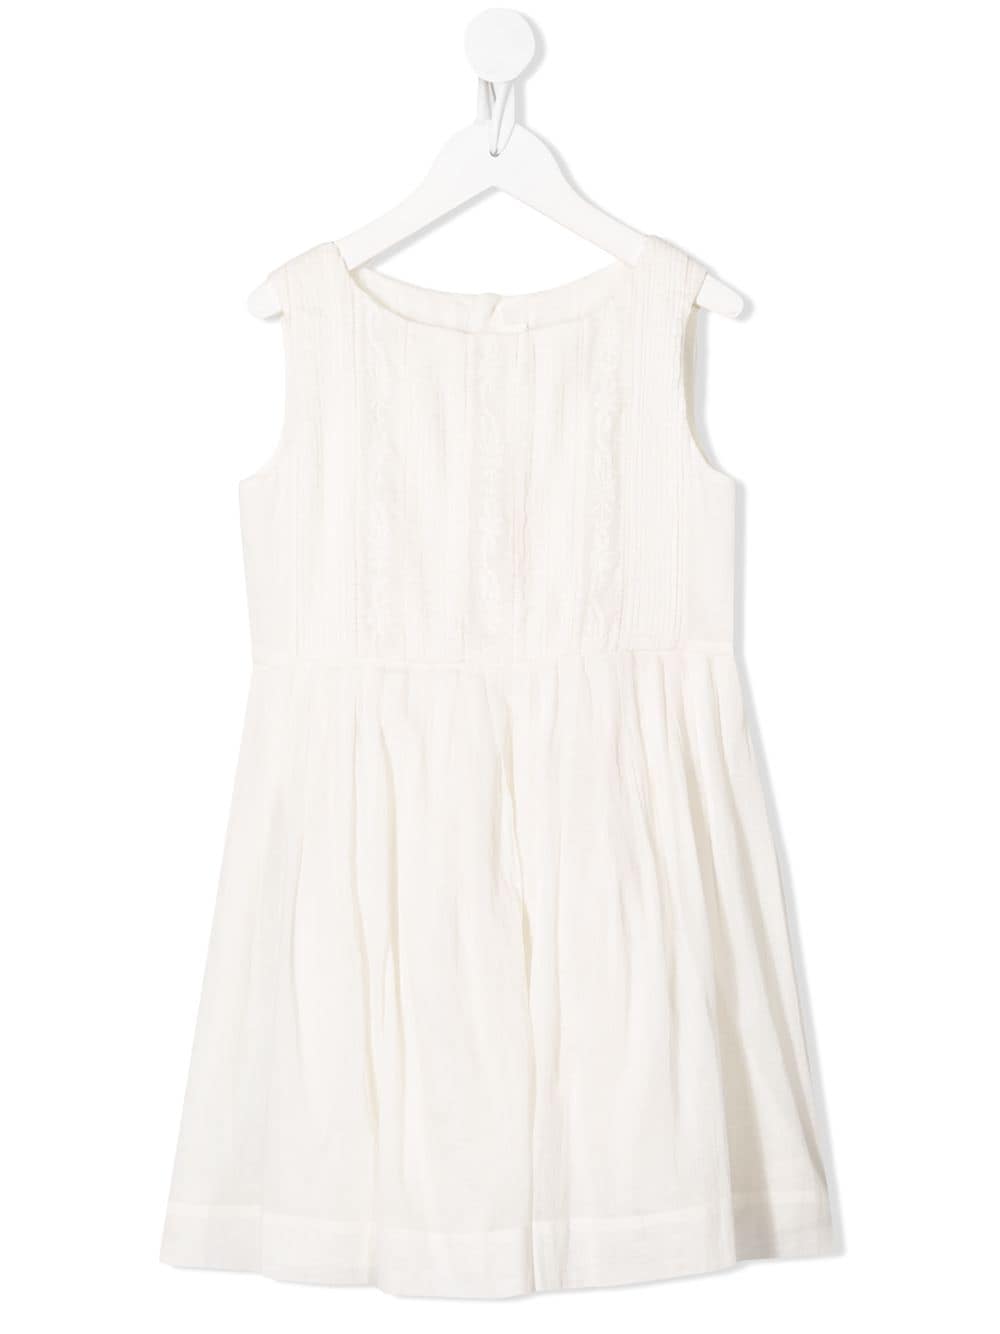 Bonpoint lace insert dress - White von Bonpoint